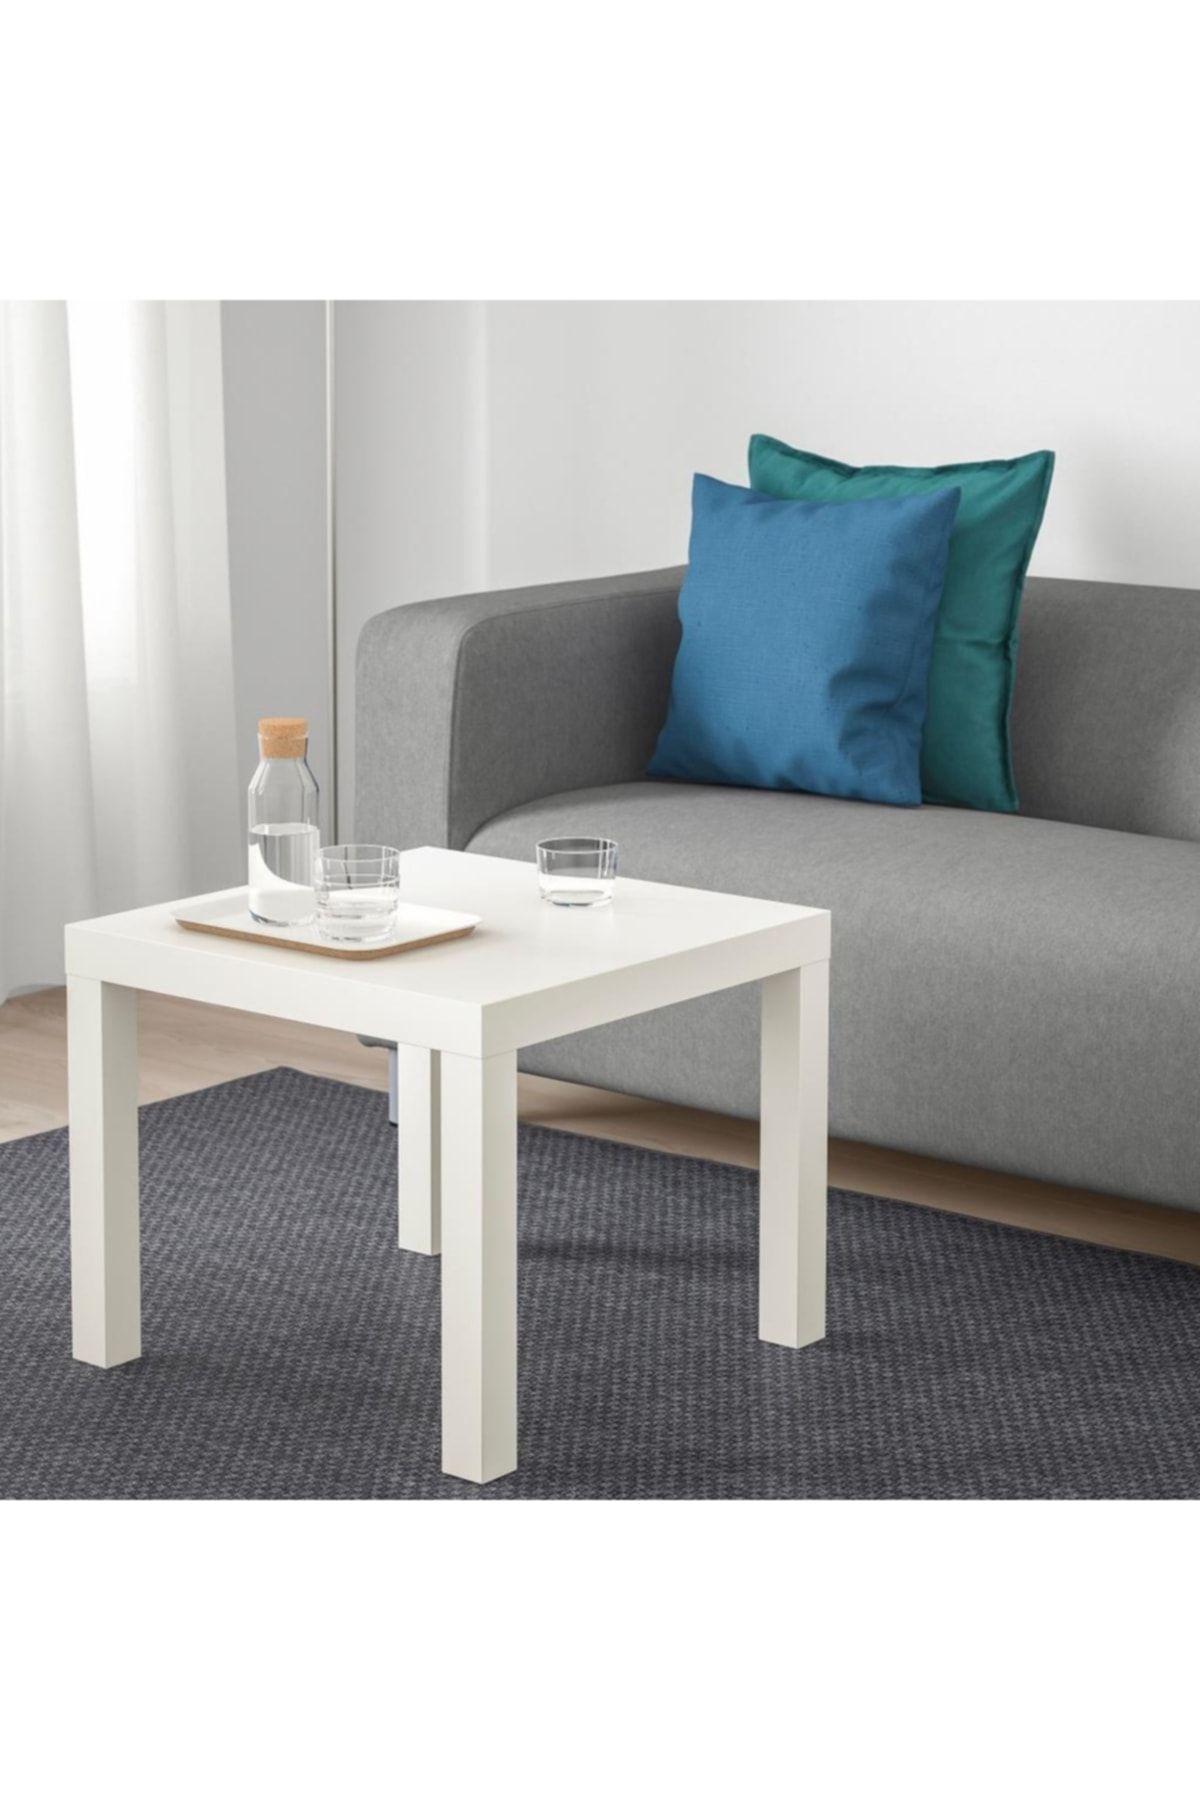 IKEA Lack Yan Sehpa Mobilya - Beyaz Renk - 55x55 Cm